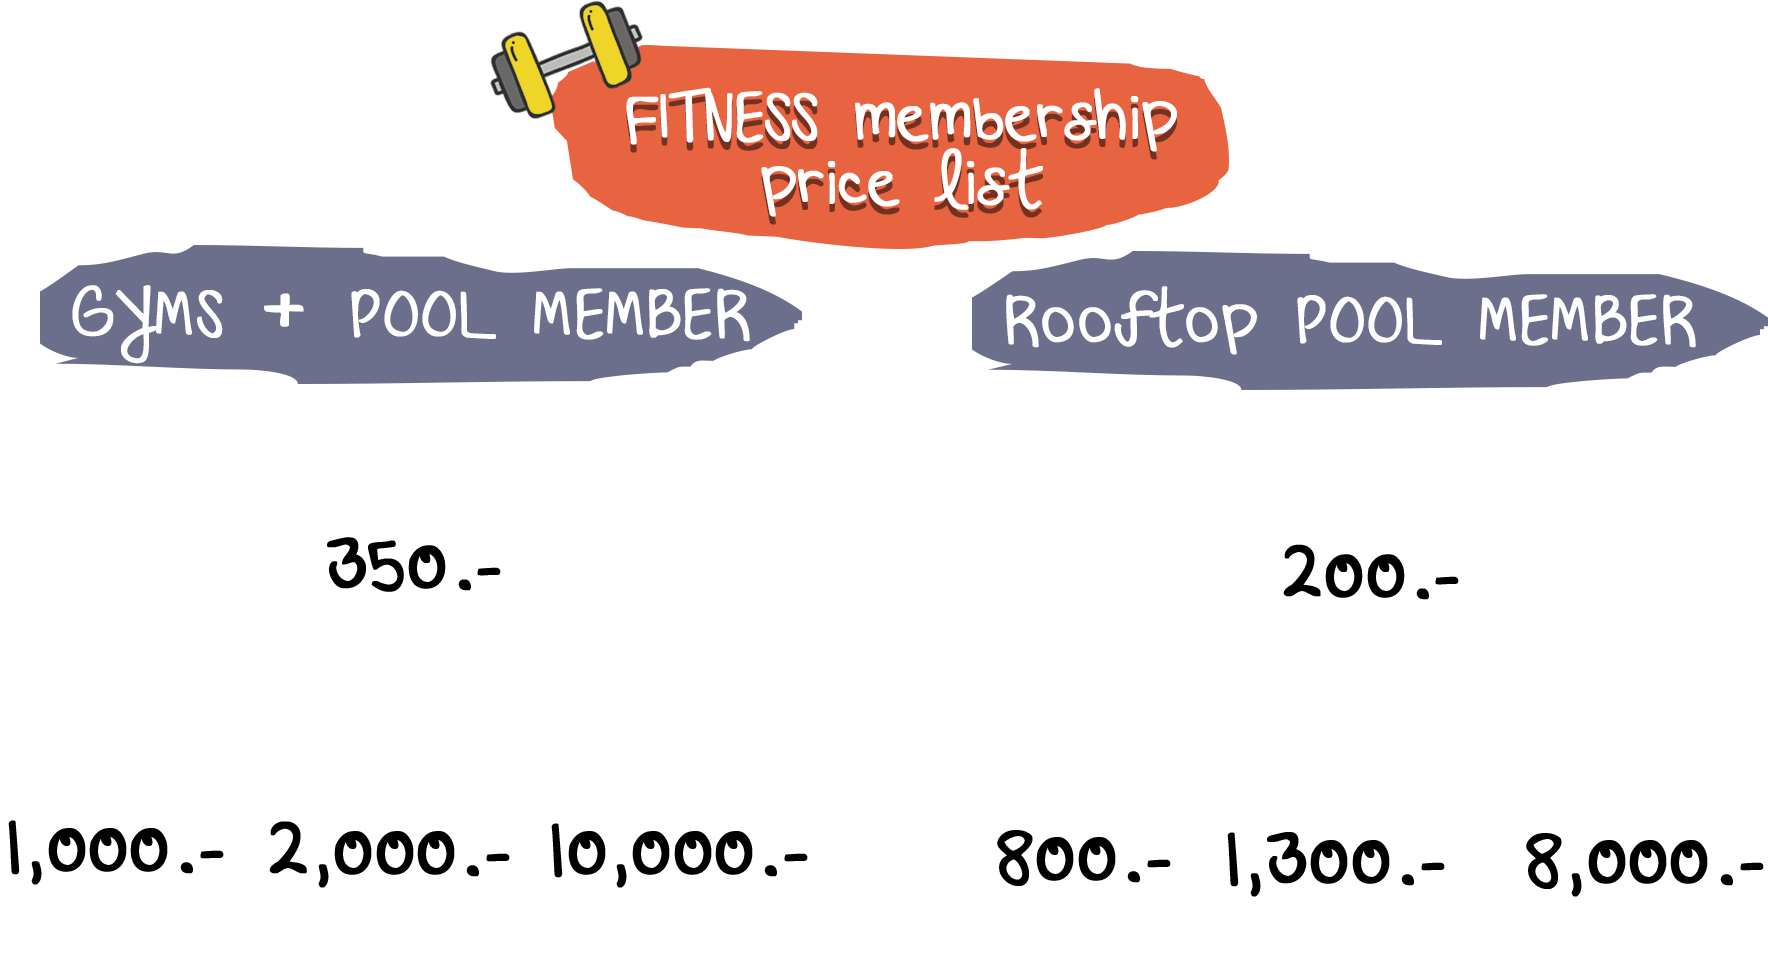 Gym or pool member price